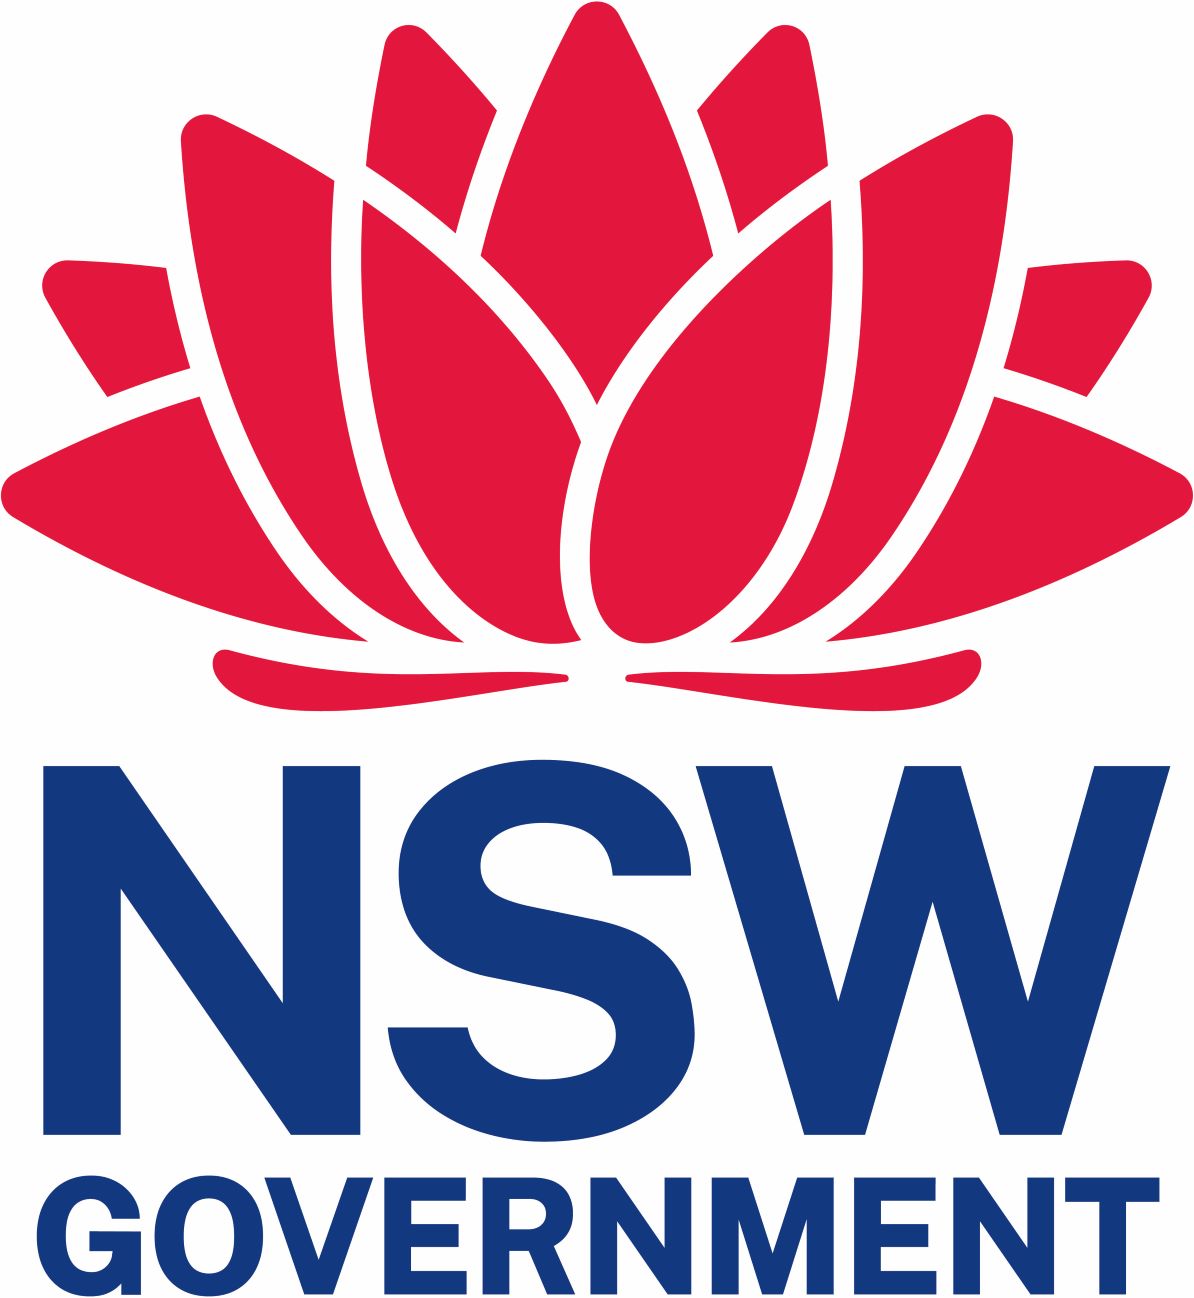 NSW Government waratah colour logo